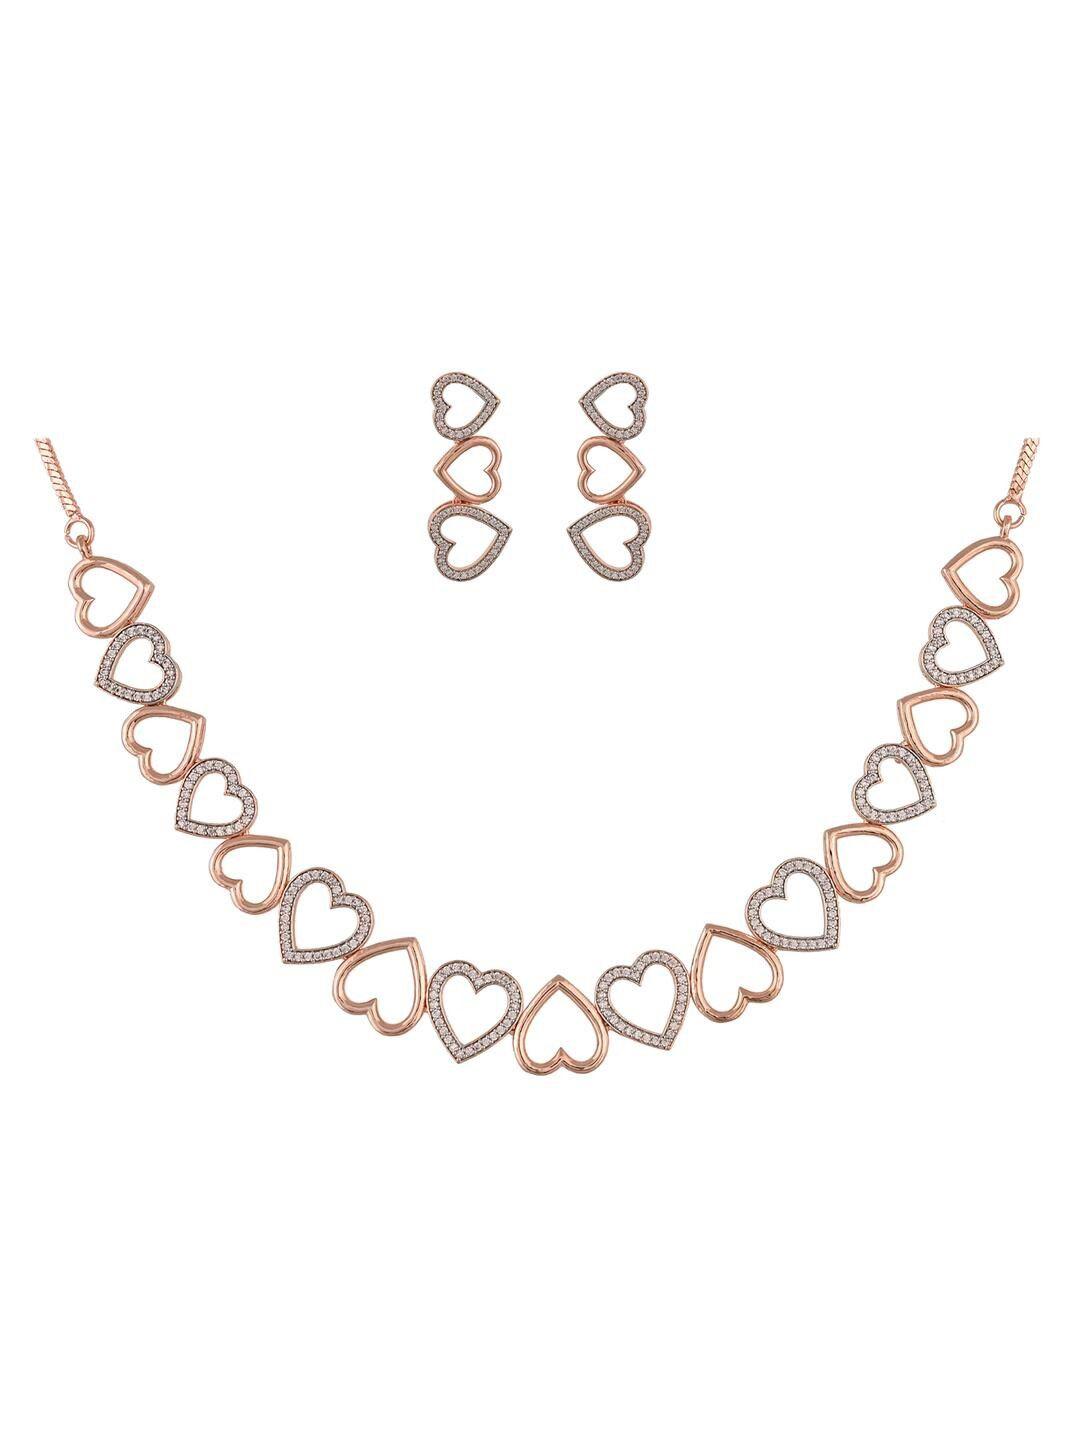 ratnavali jewels rose gold-plated ad-studded & beaded heart shaped jewellery set